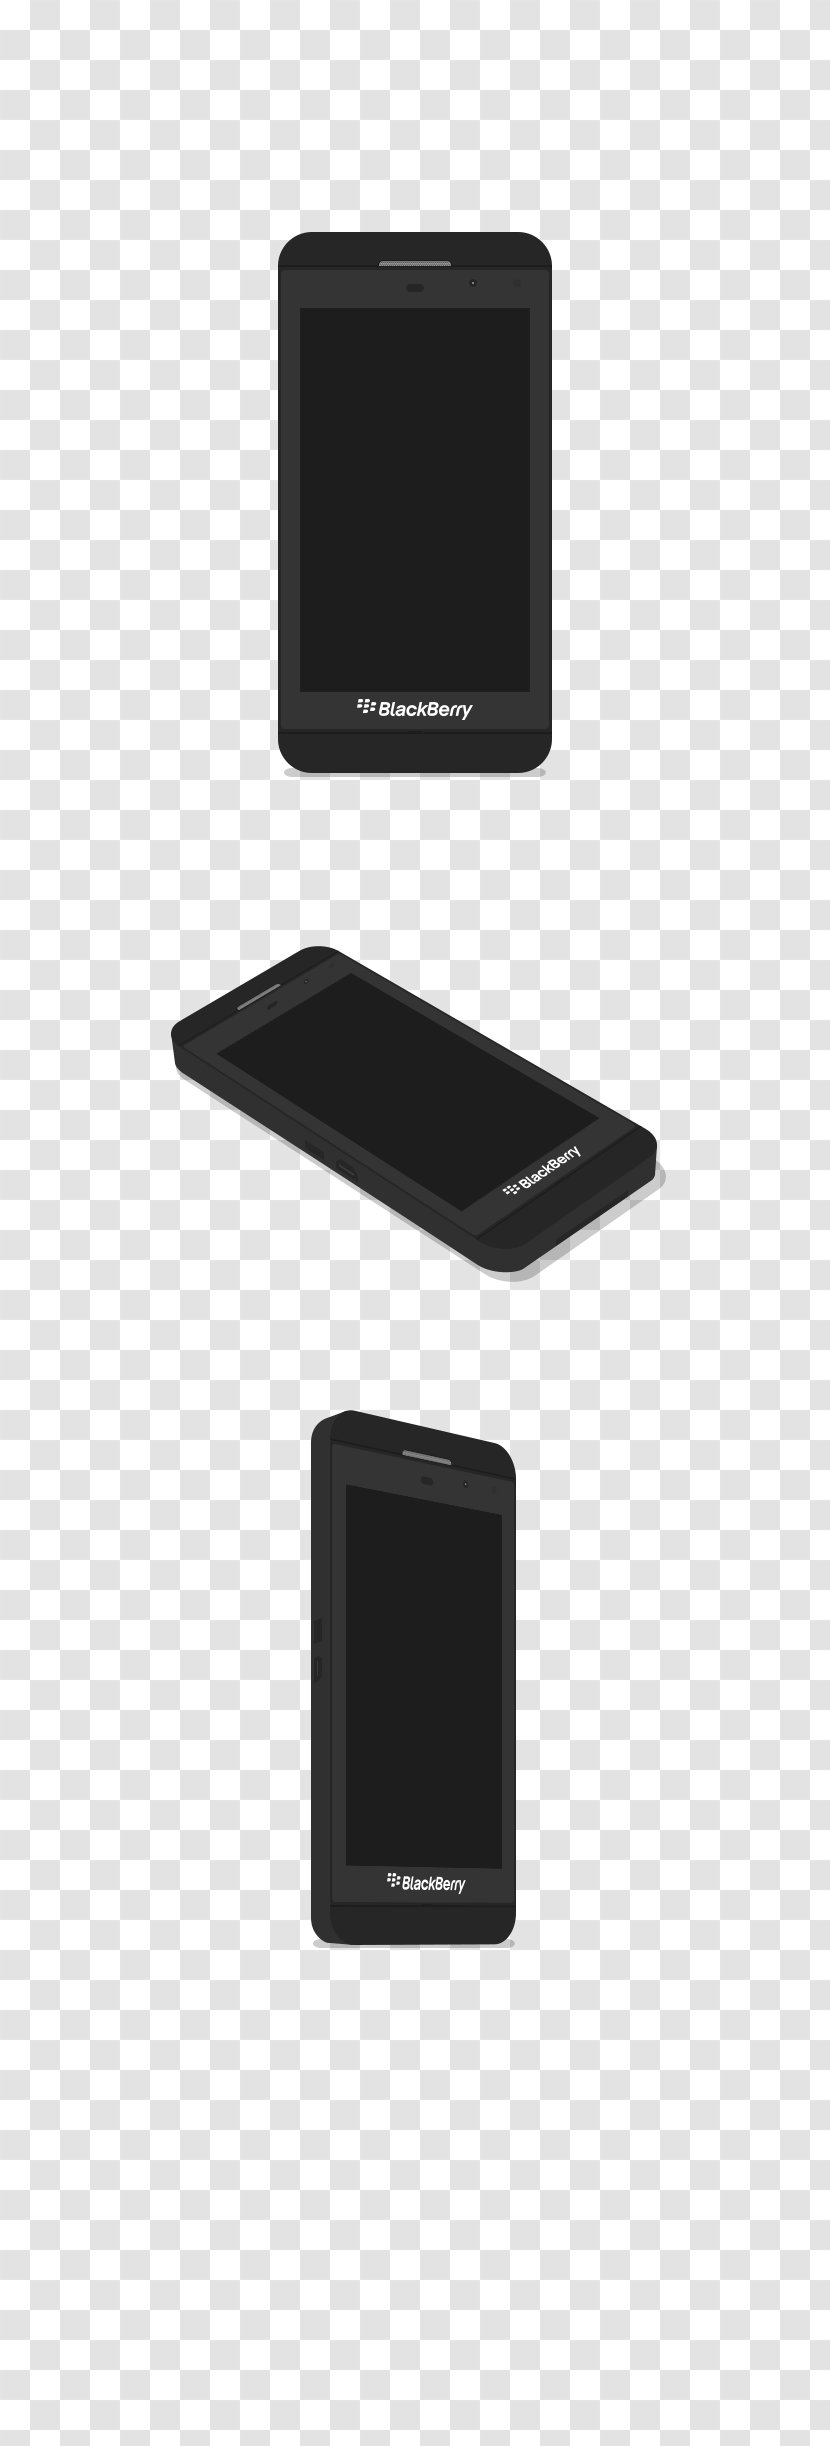 Bejeweled BlackBerry Smartphone Icon - Electronics - Model Diagram Transparent PNG